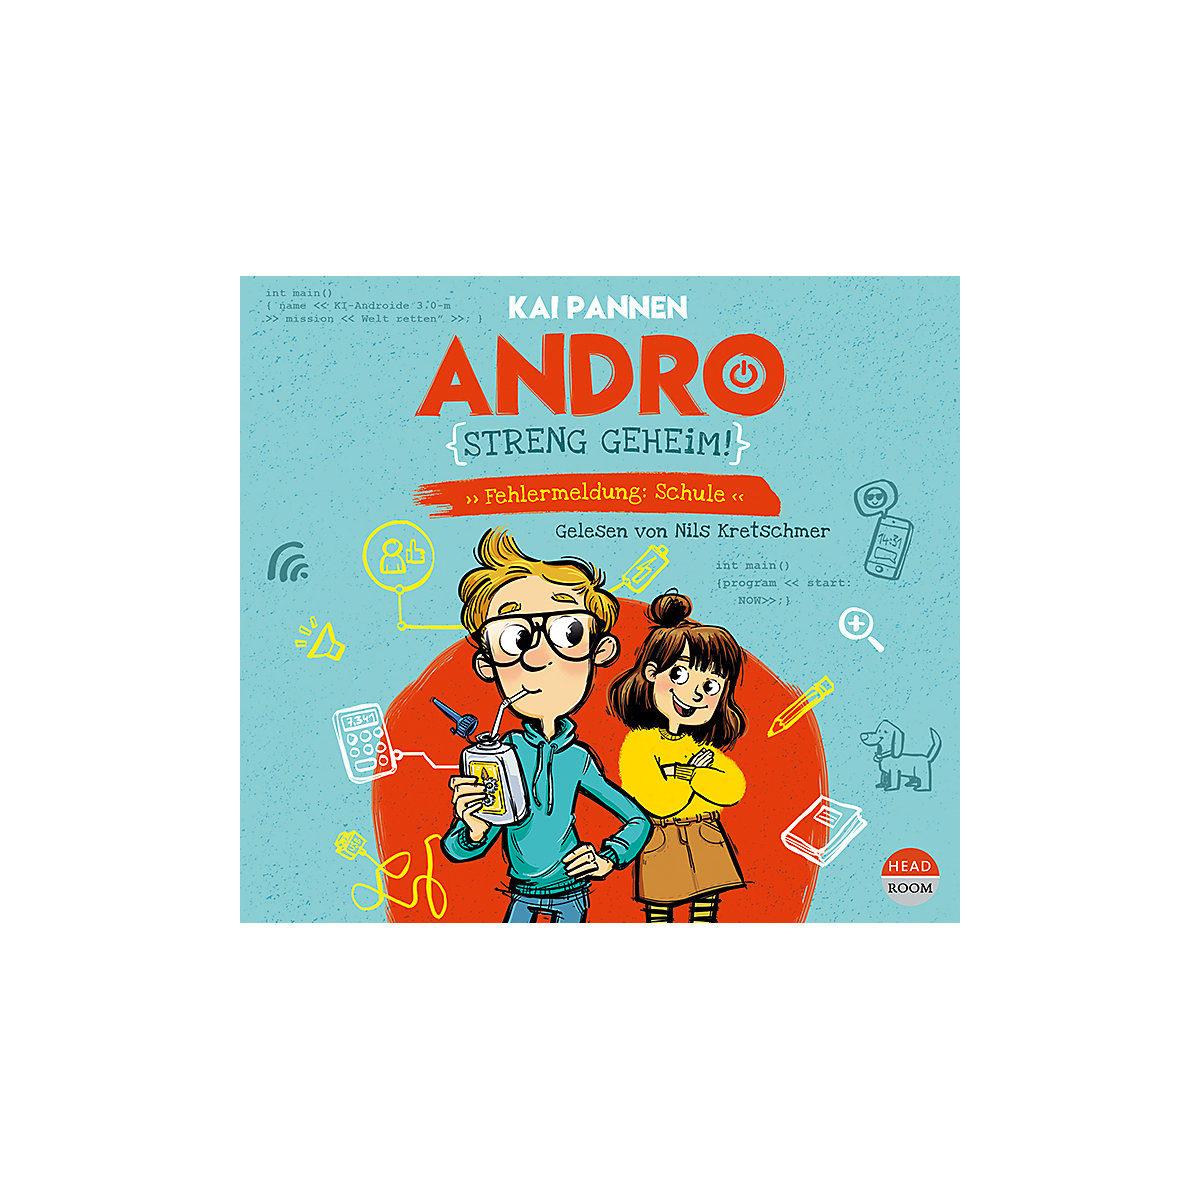 Andro streng geheim! Fehlermeldung Schule (Teil 1) 1 Audio-CD